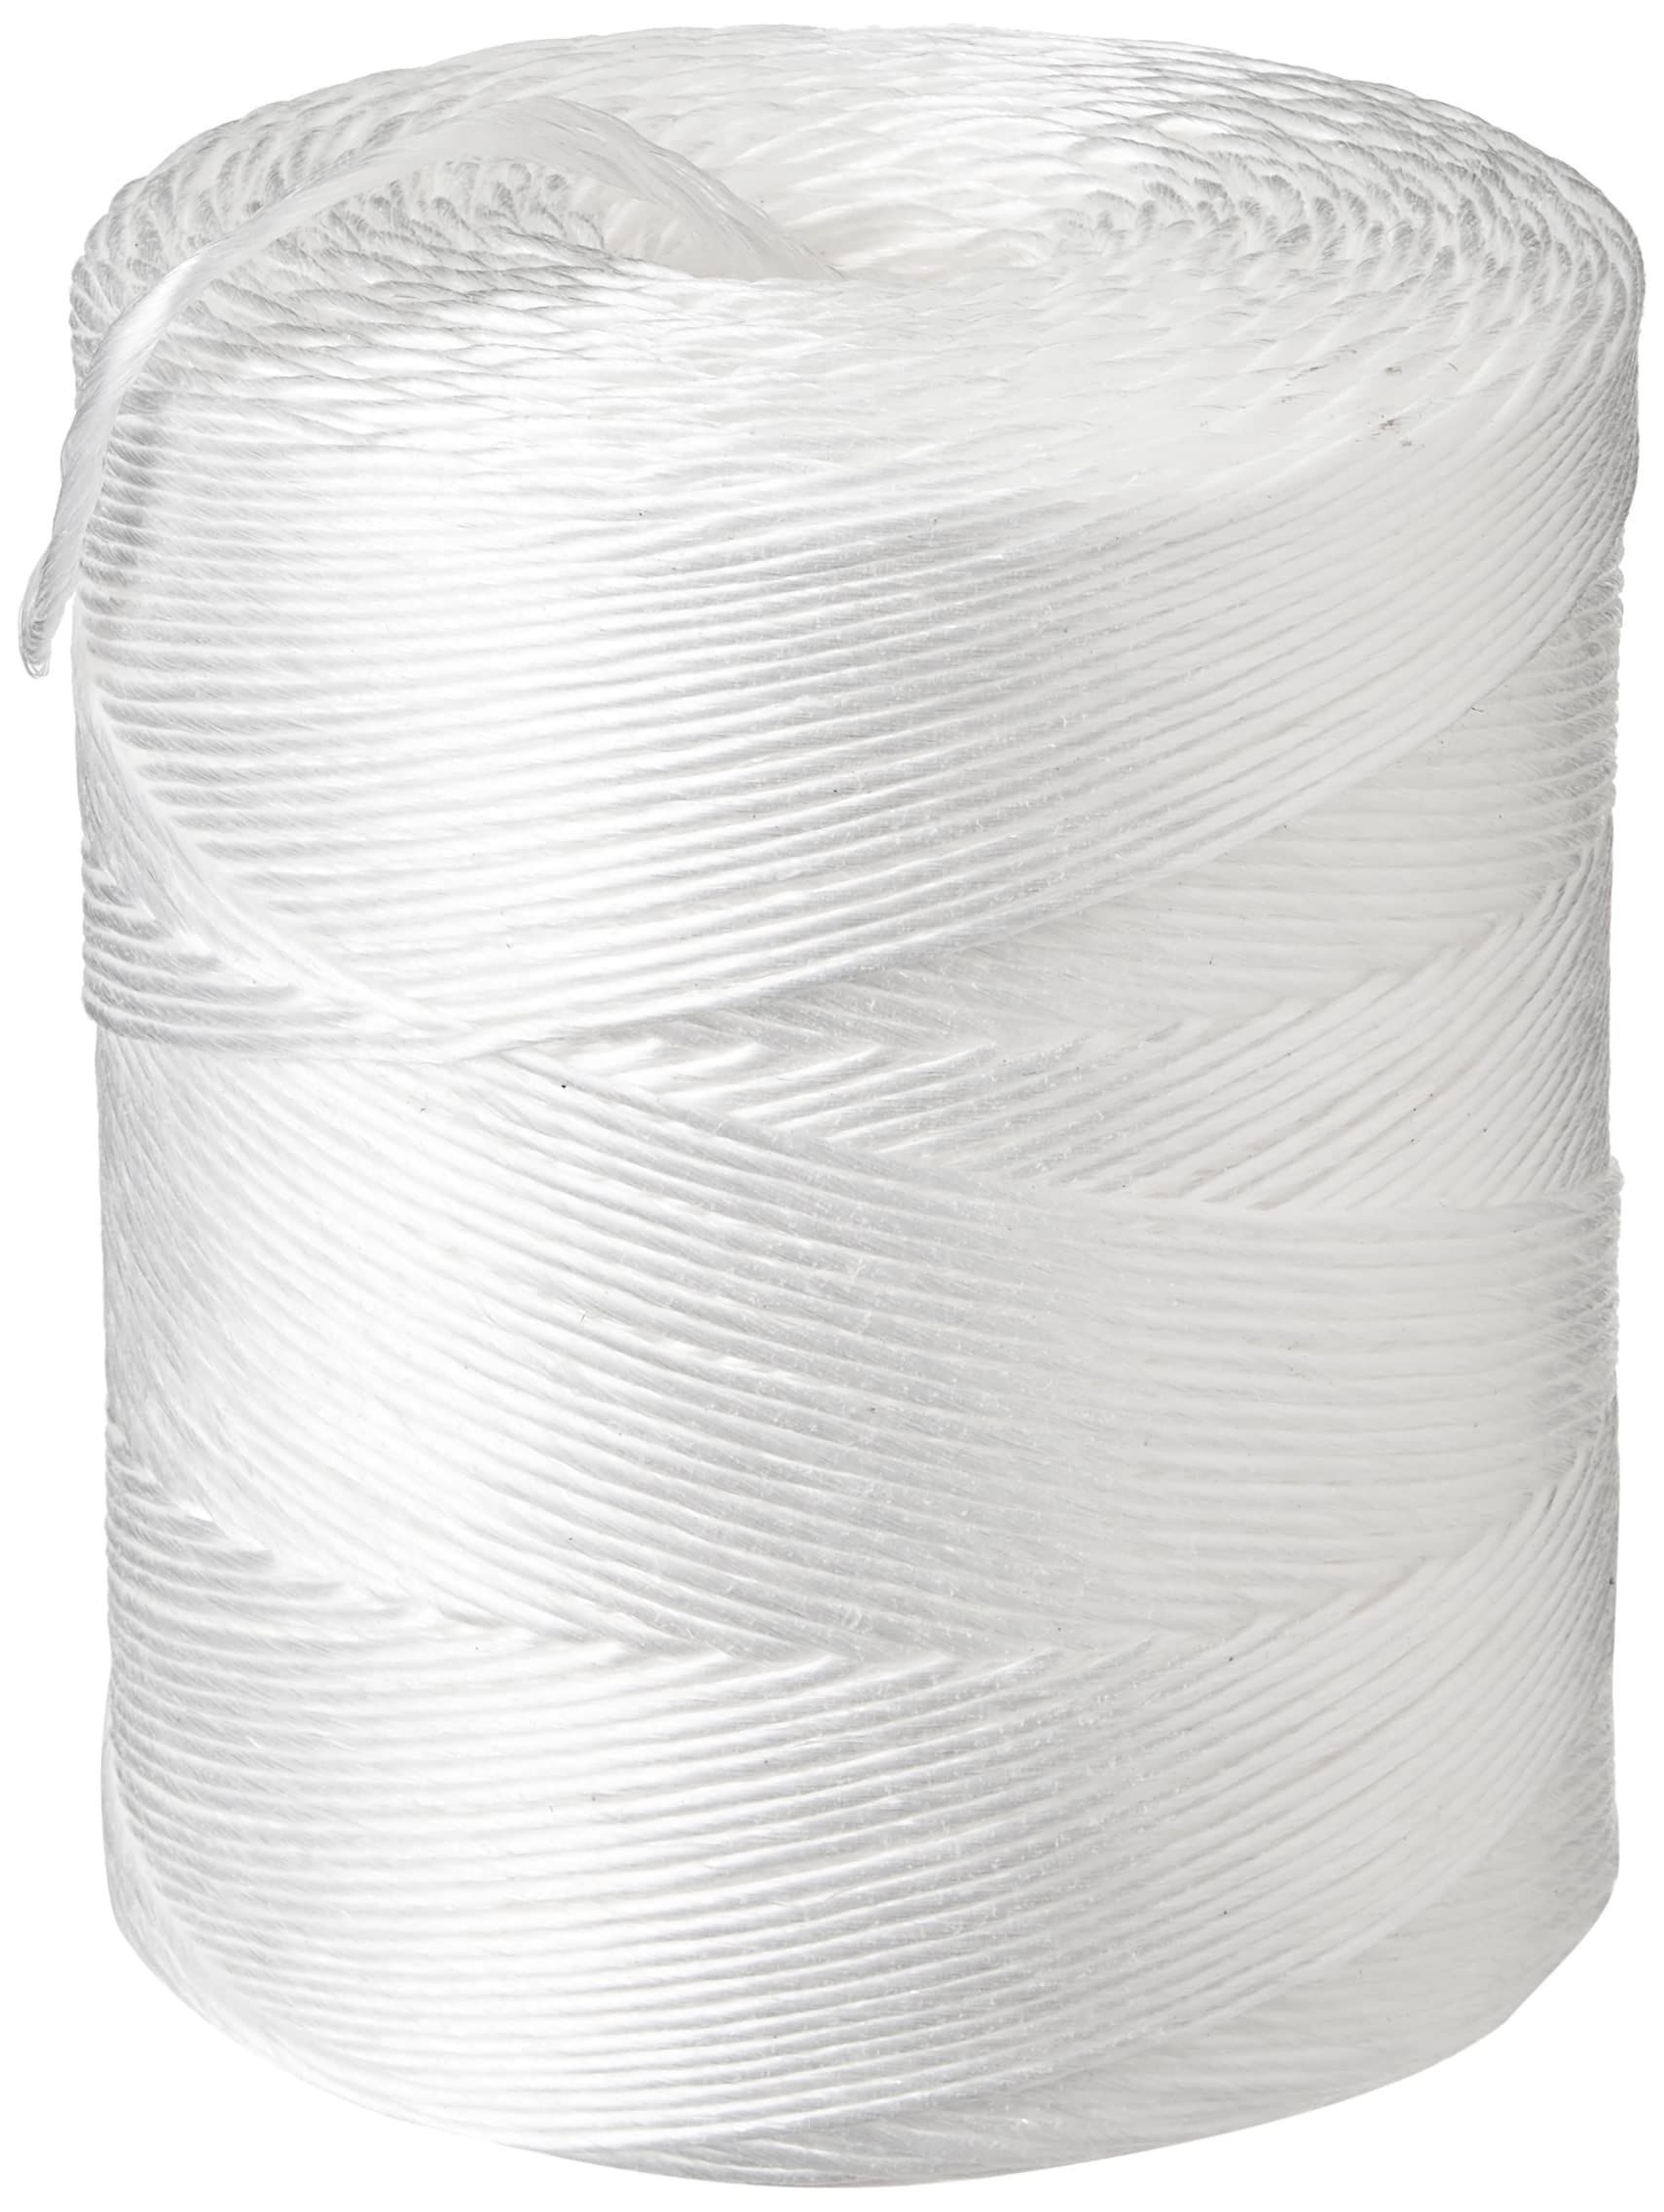 Шпагат из полипропилена Kraftcom, 3мм х 100м (6шт), цвет - белый шнур для вязания без сердечника 70% хлопок 30% полиэстер ширина 3мм 100м 160±10гр 128